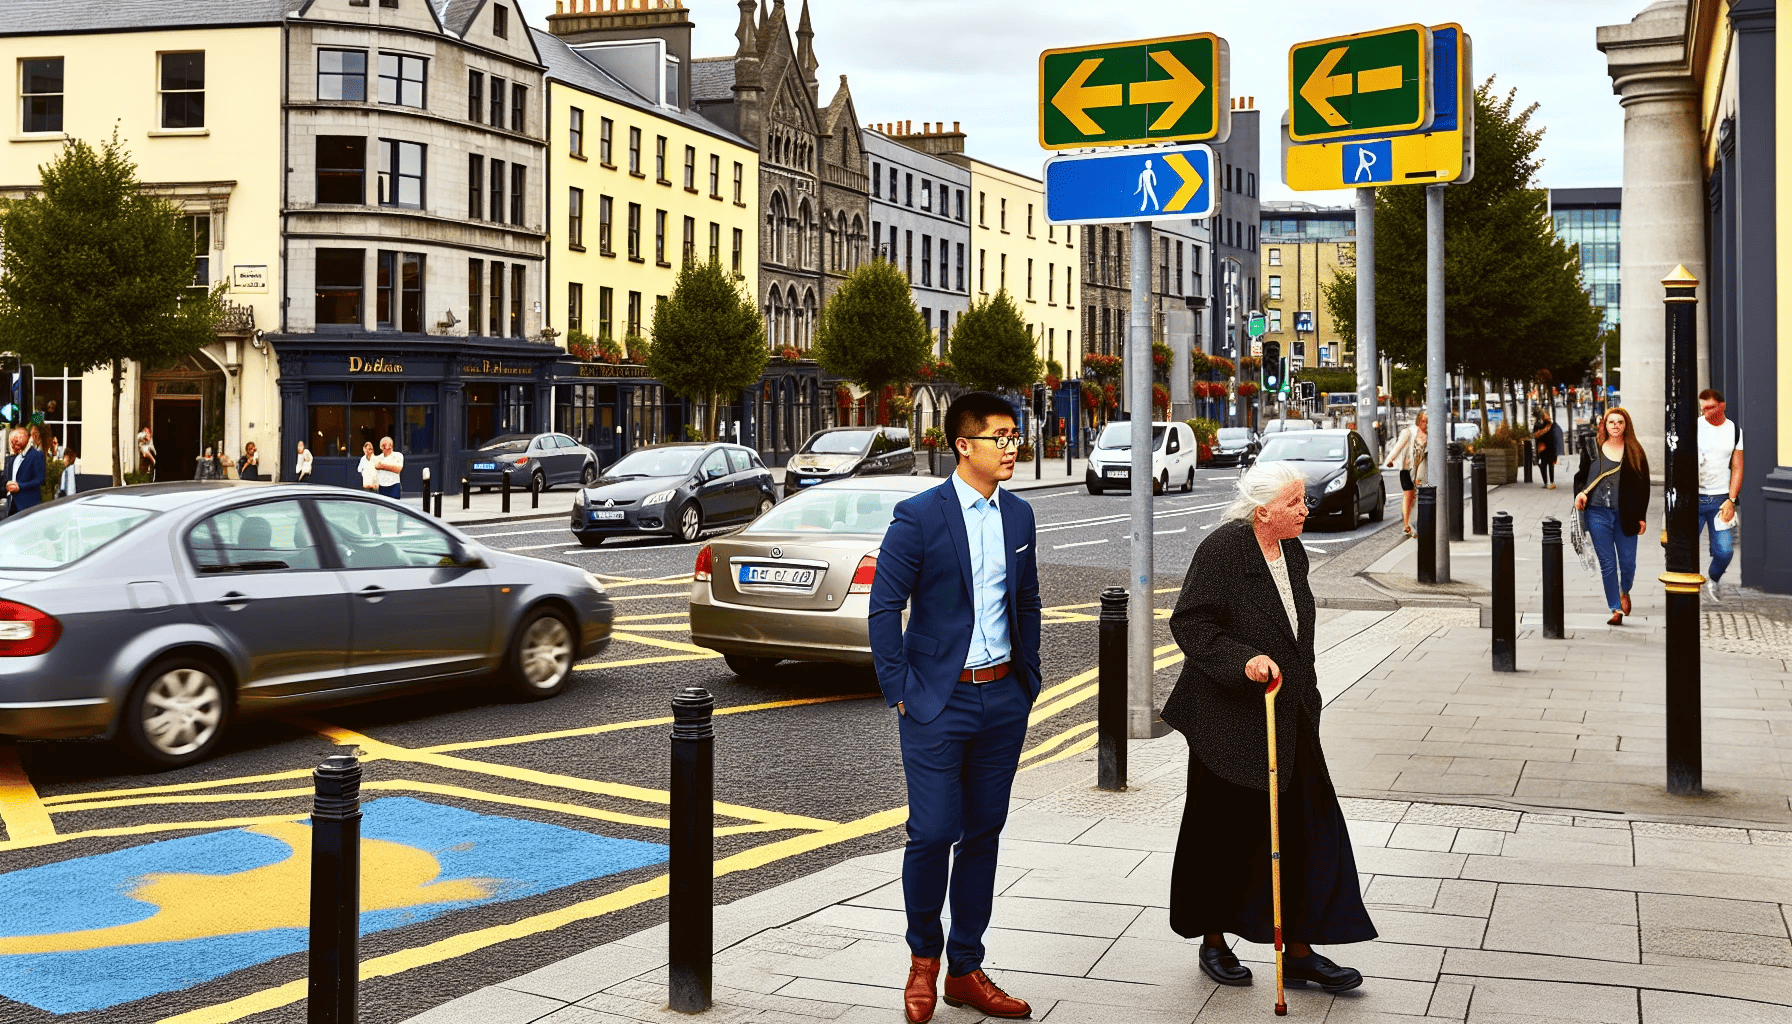 Parking in an Irish city